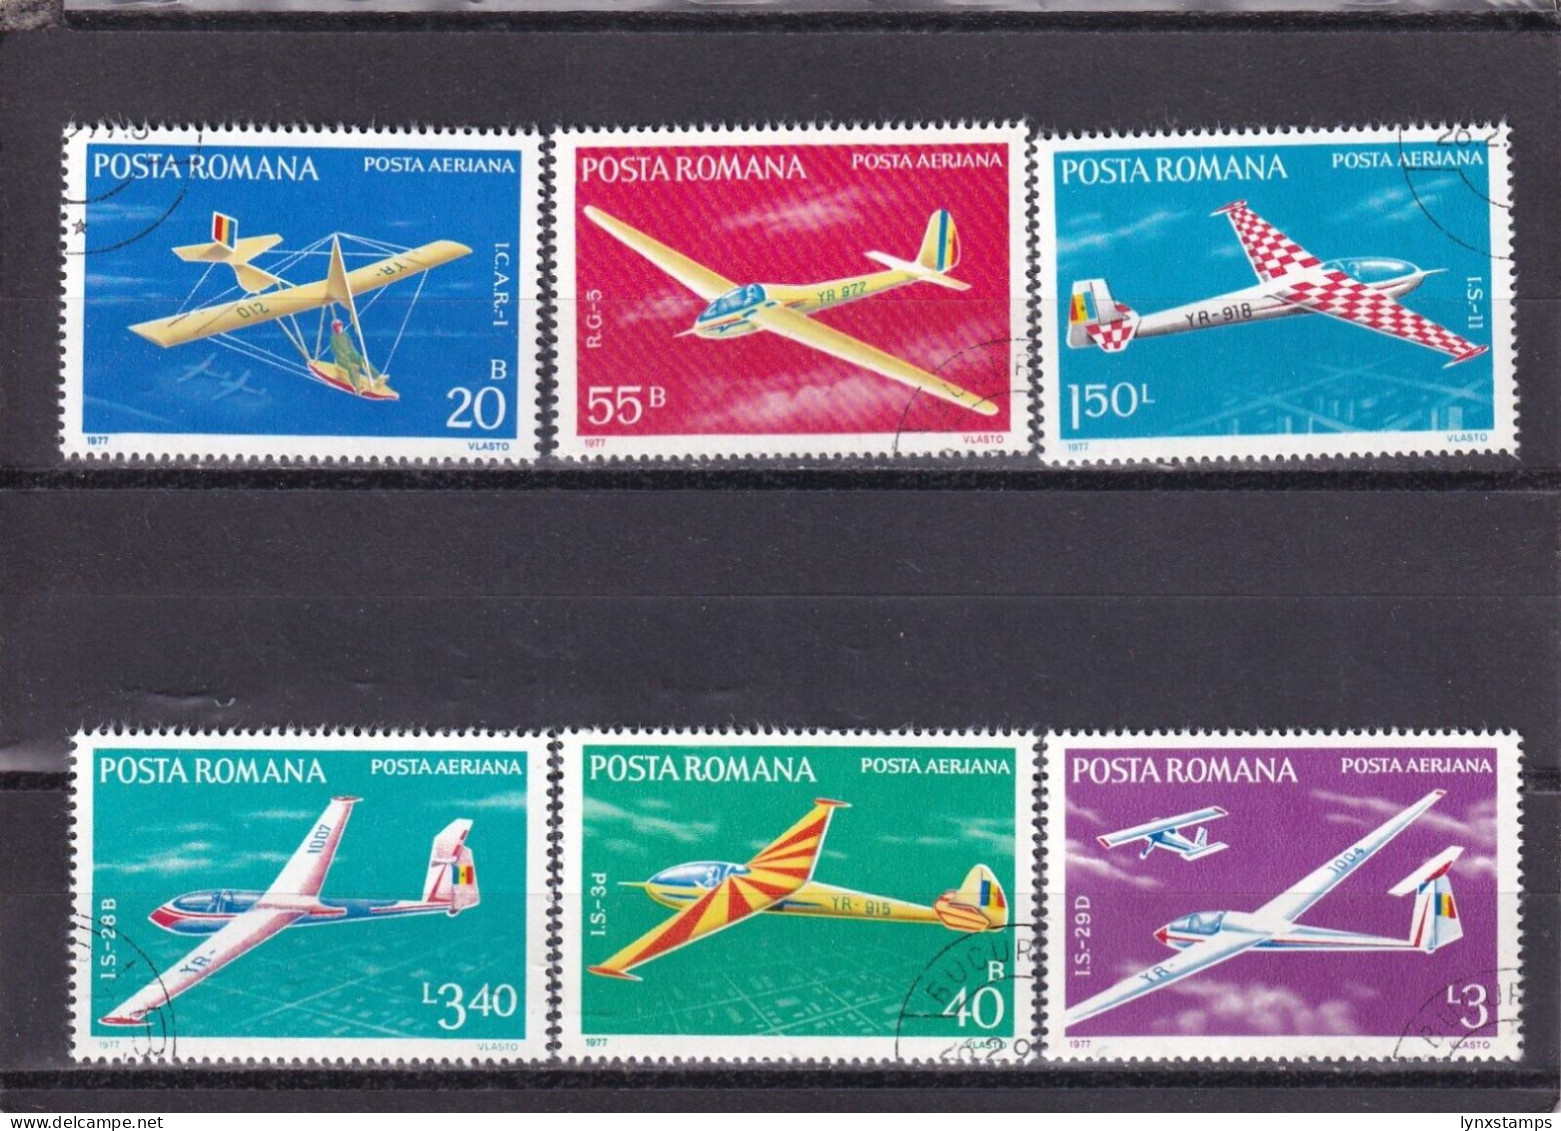 LI02 Romania 1977 Aviation - Gliders Full Set Used Stamps - Usado